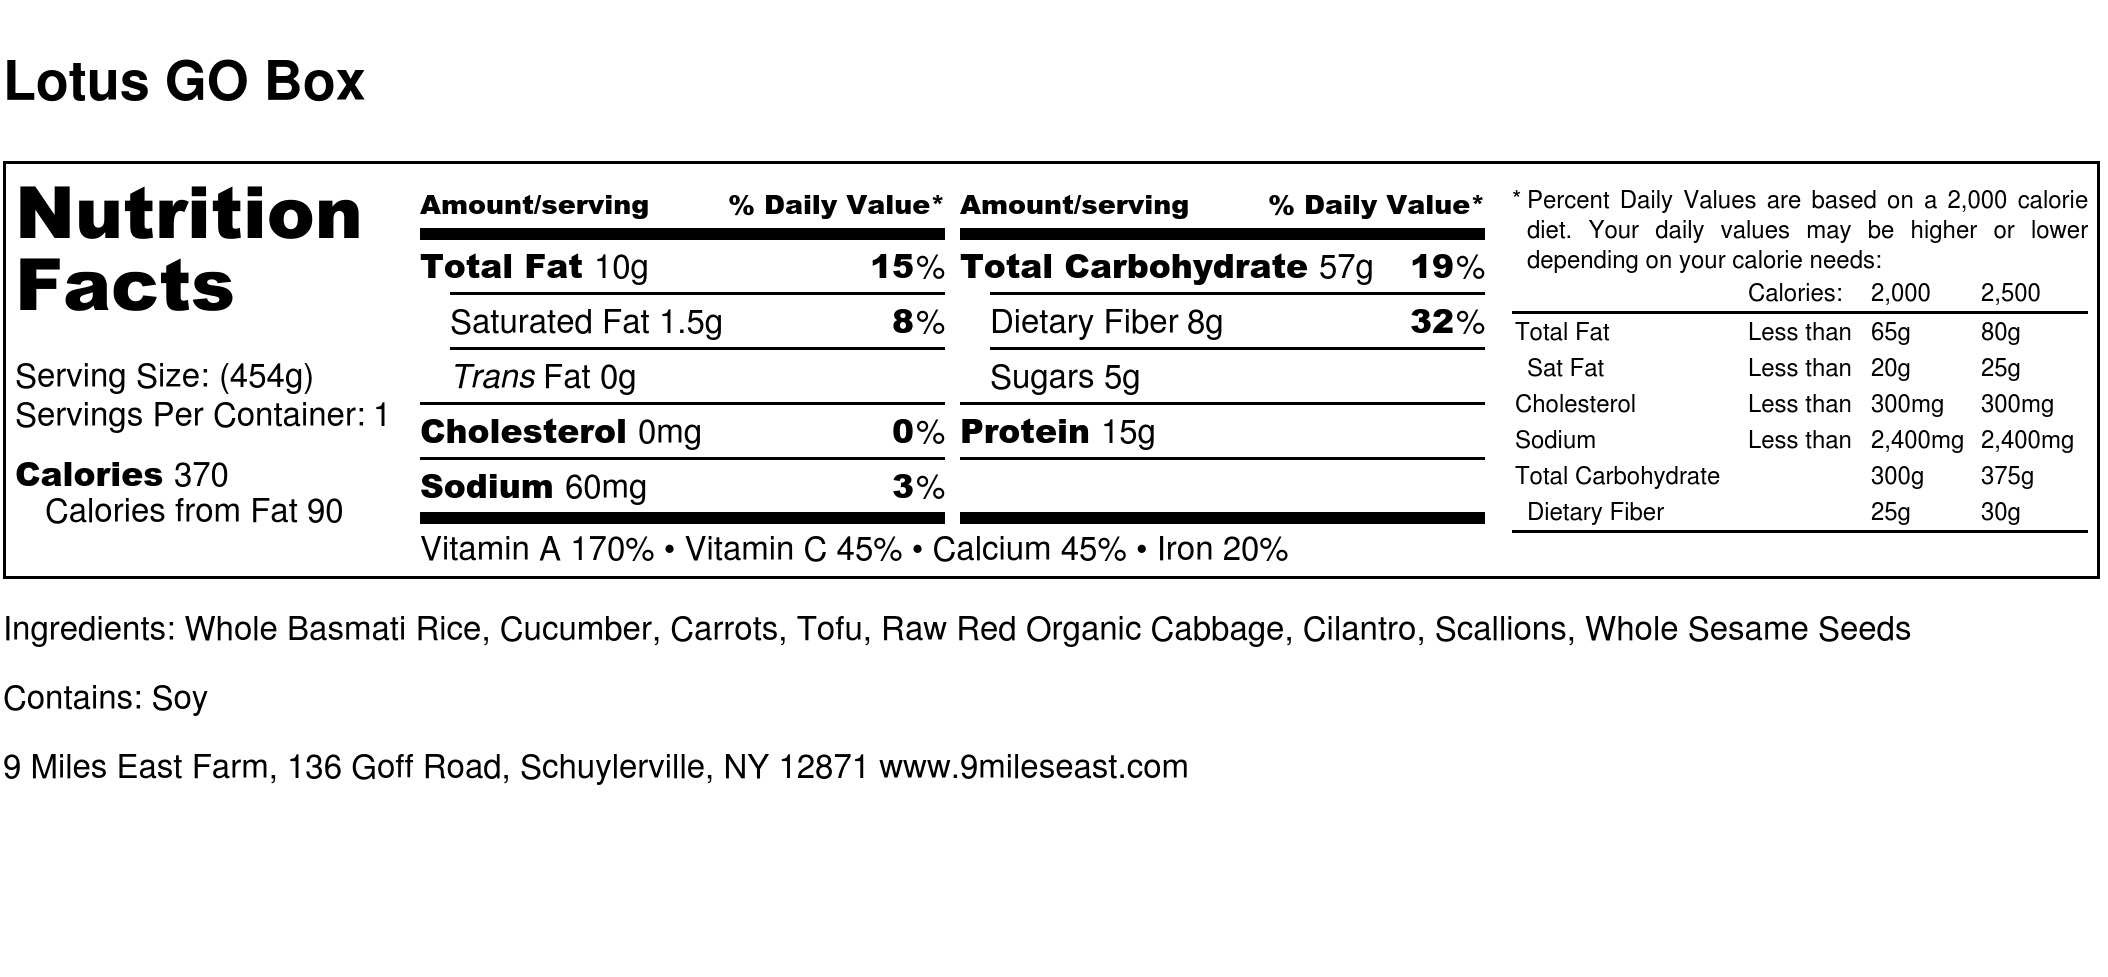 Lotus GO Box - Nutrition Label.jpg